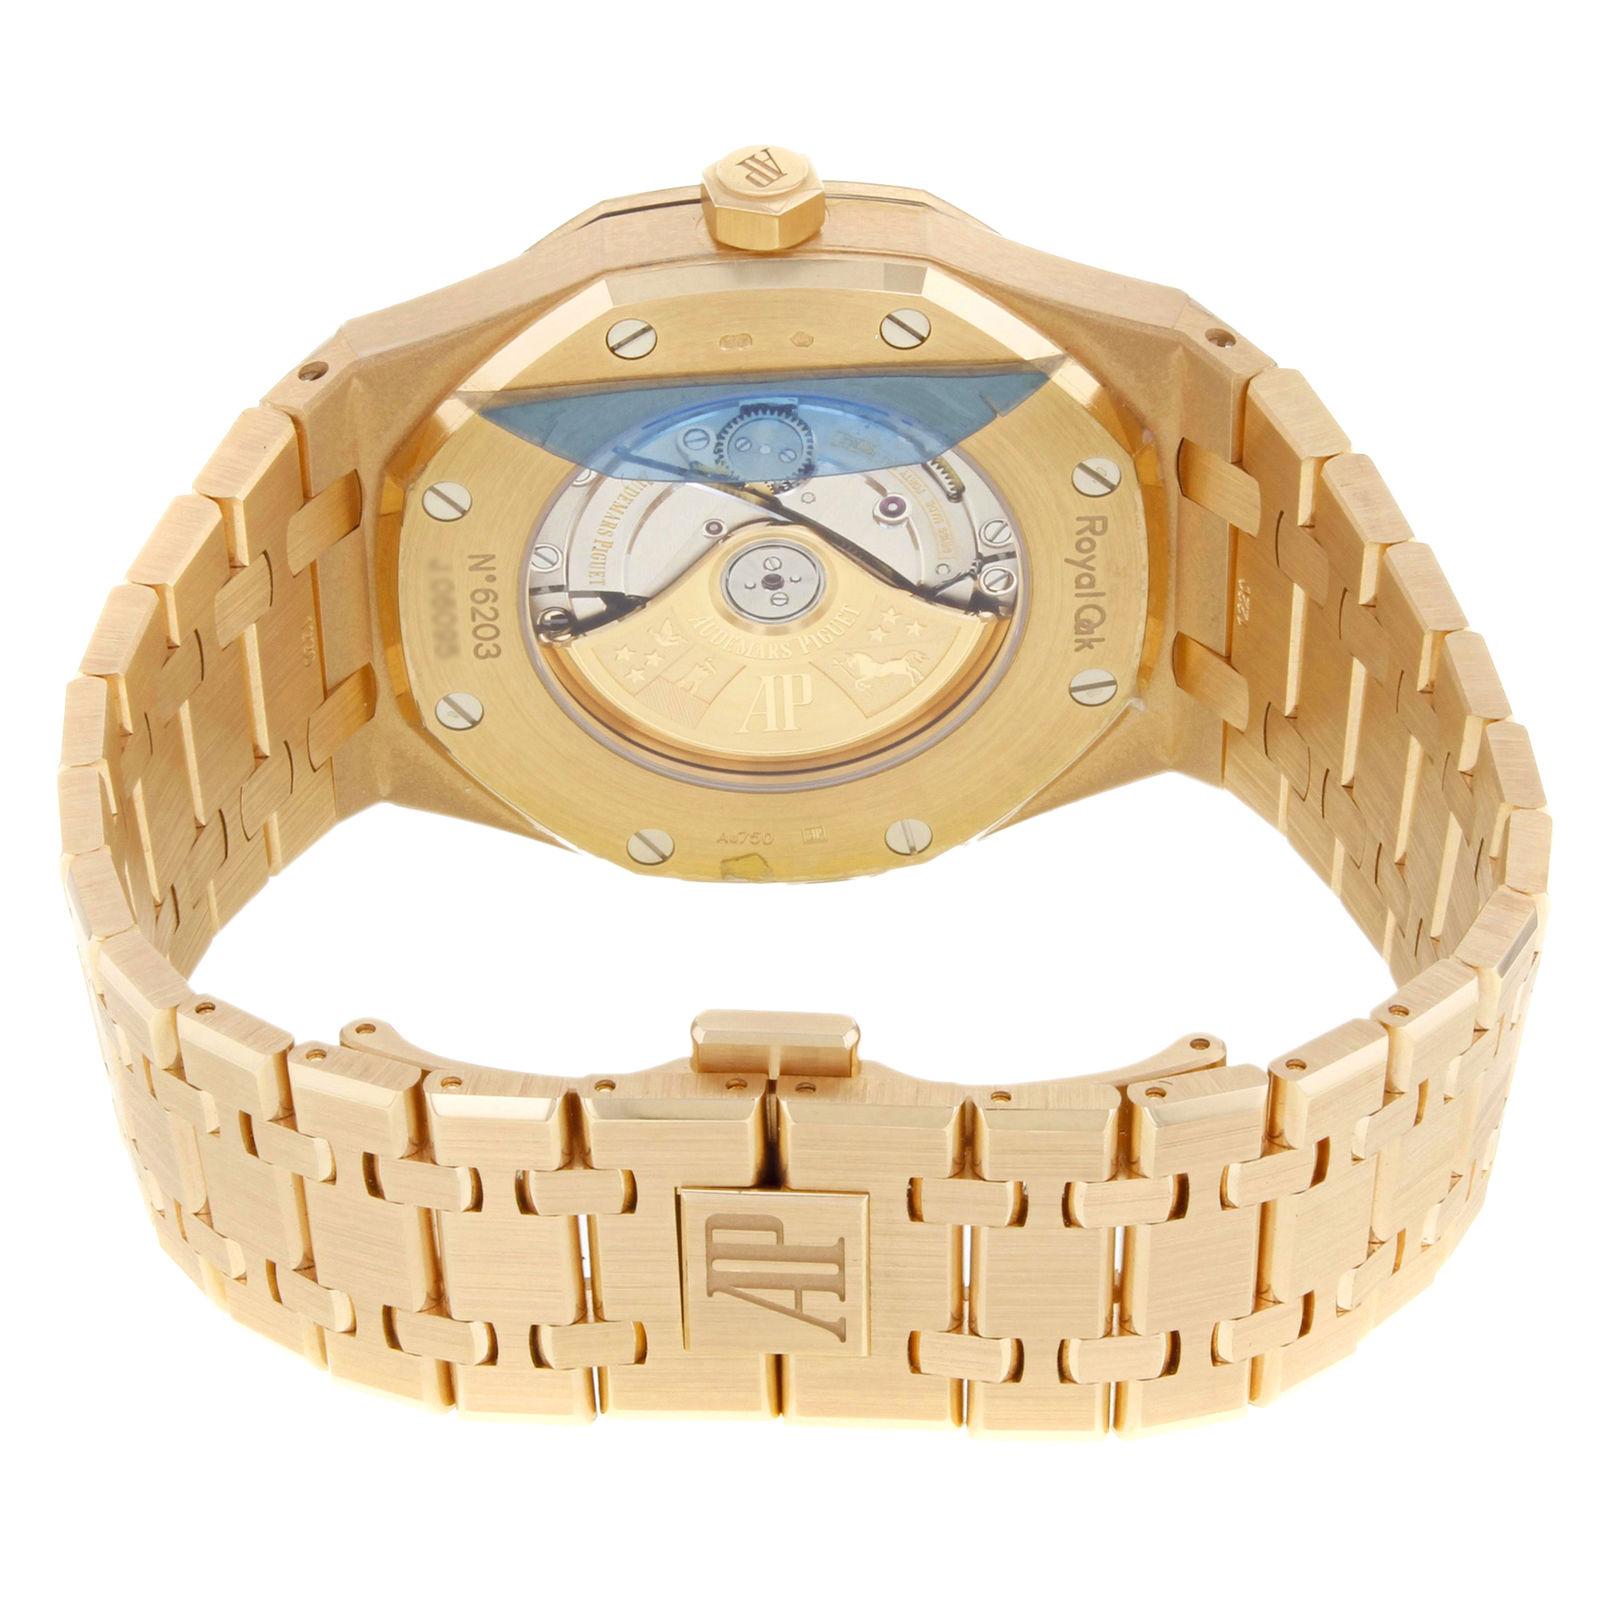 Men's Audemars Piguet Royal Oak 15400OR.OO.1220OR.01 18 Karat Gold Automatic Watch